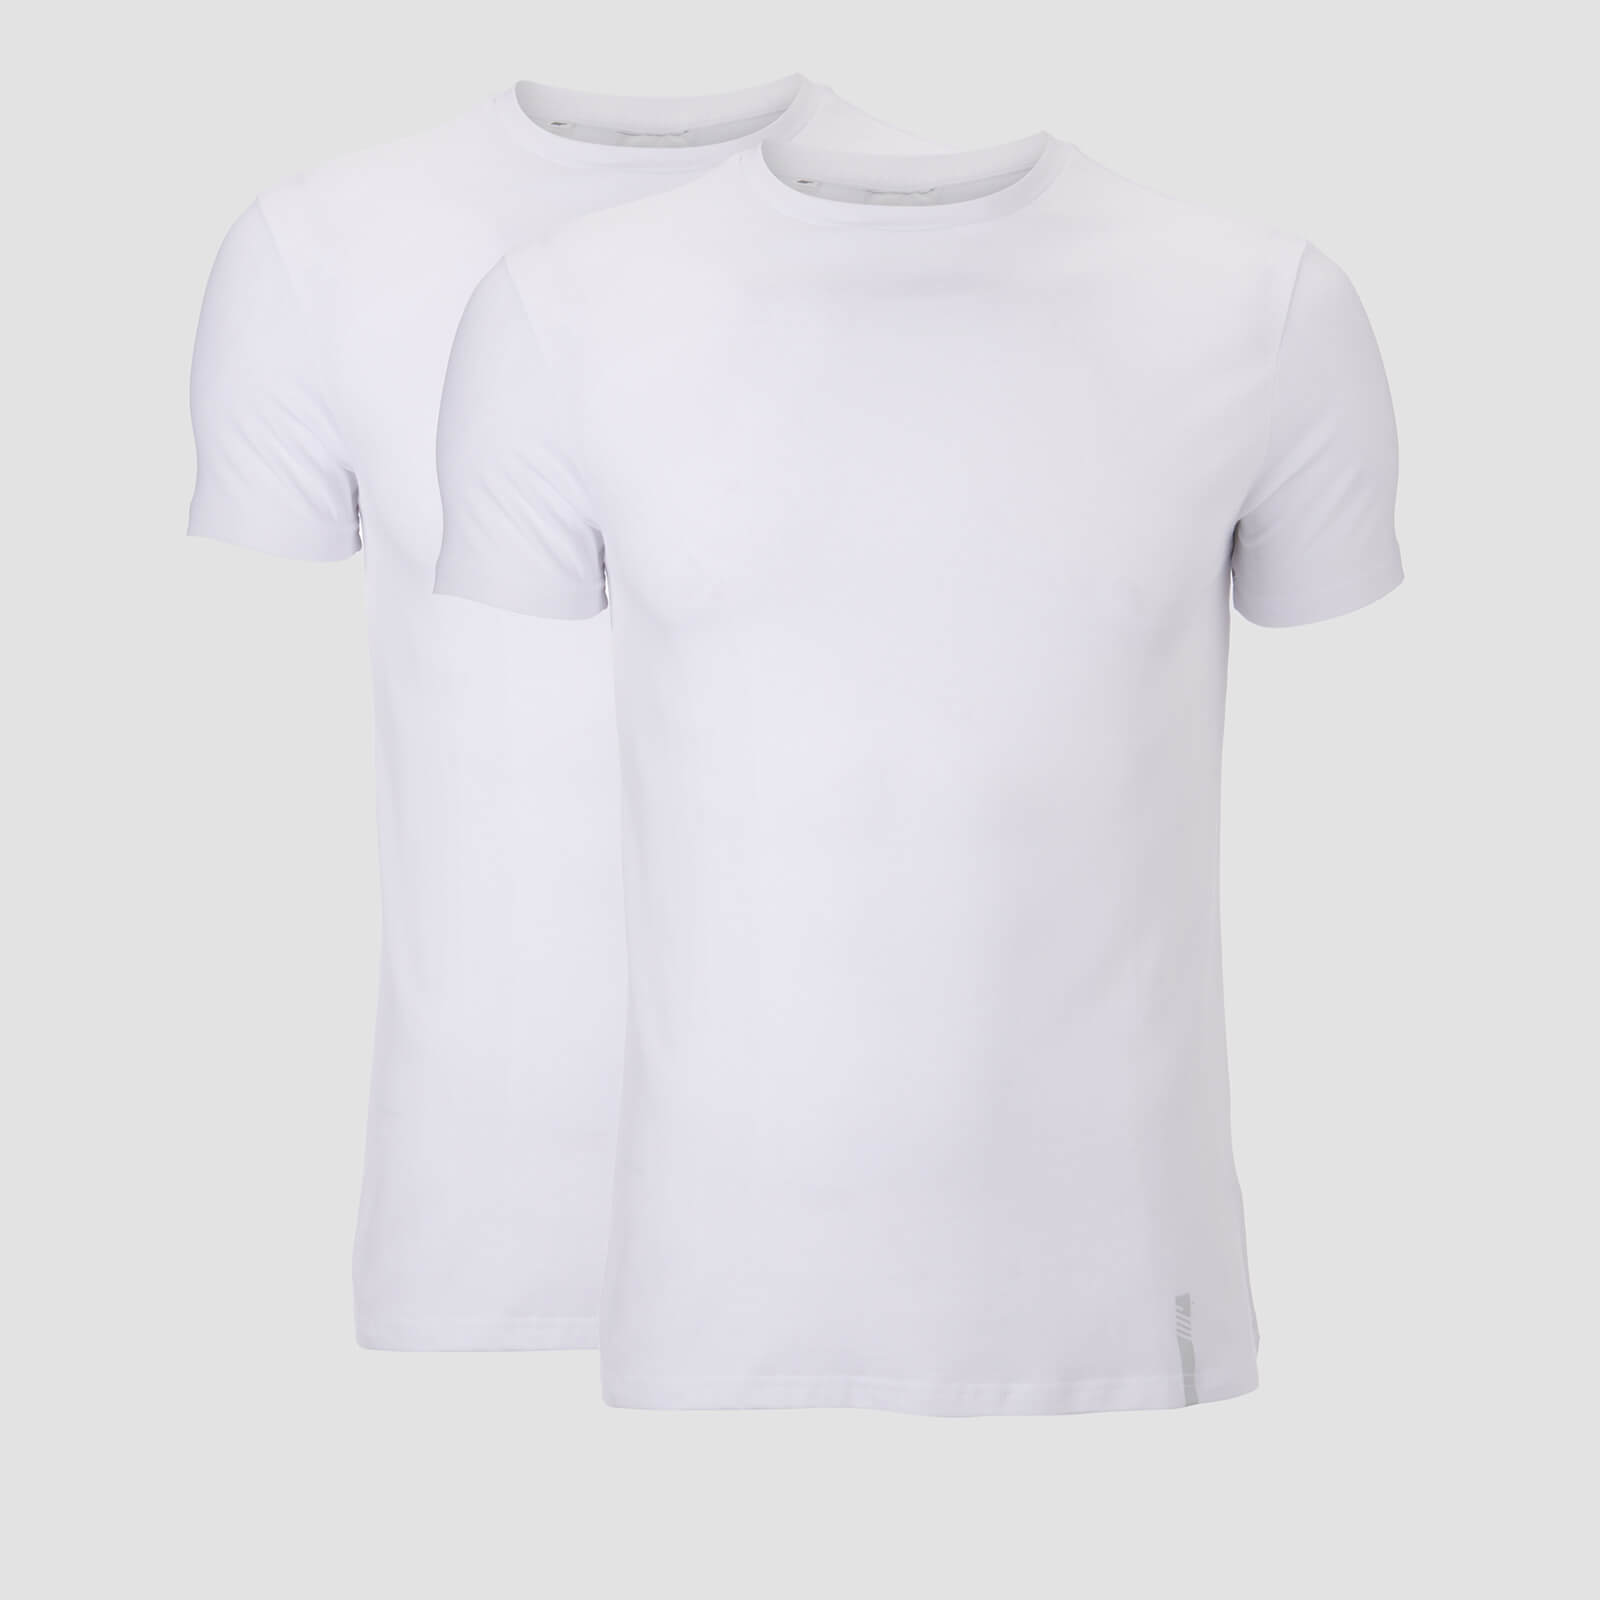 MP Men's Luxe Classic T-Shirt - White/White (2 Gói) - XS